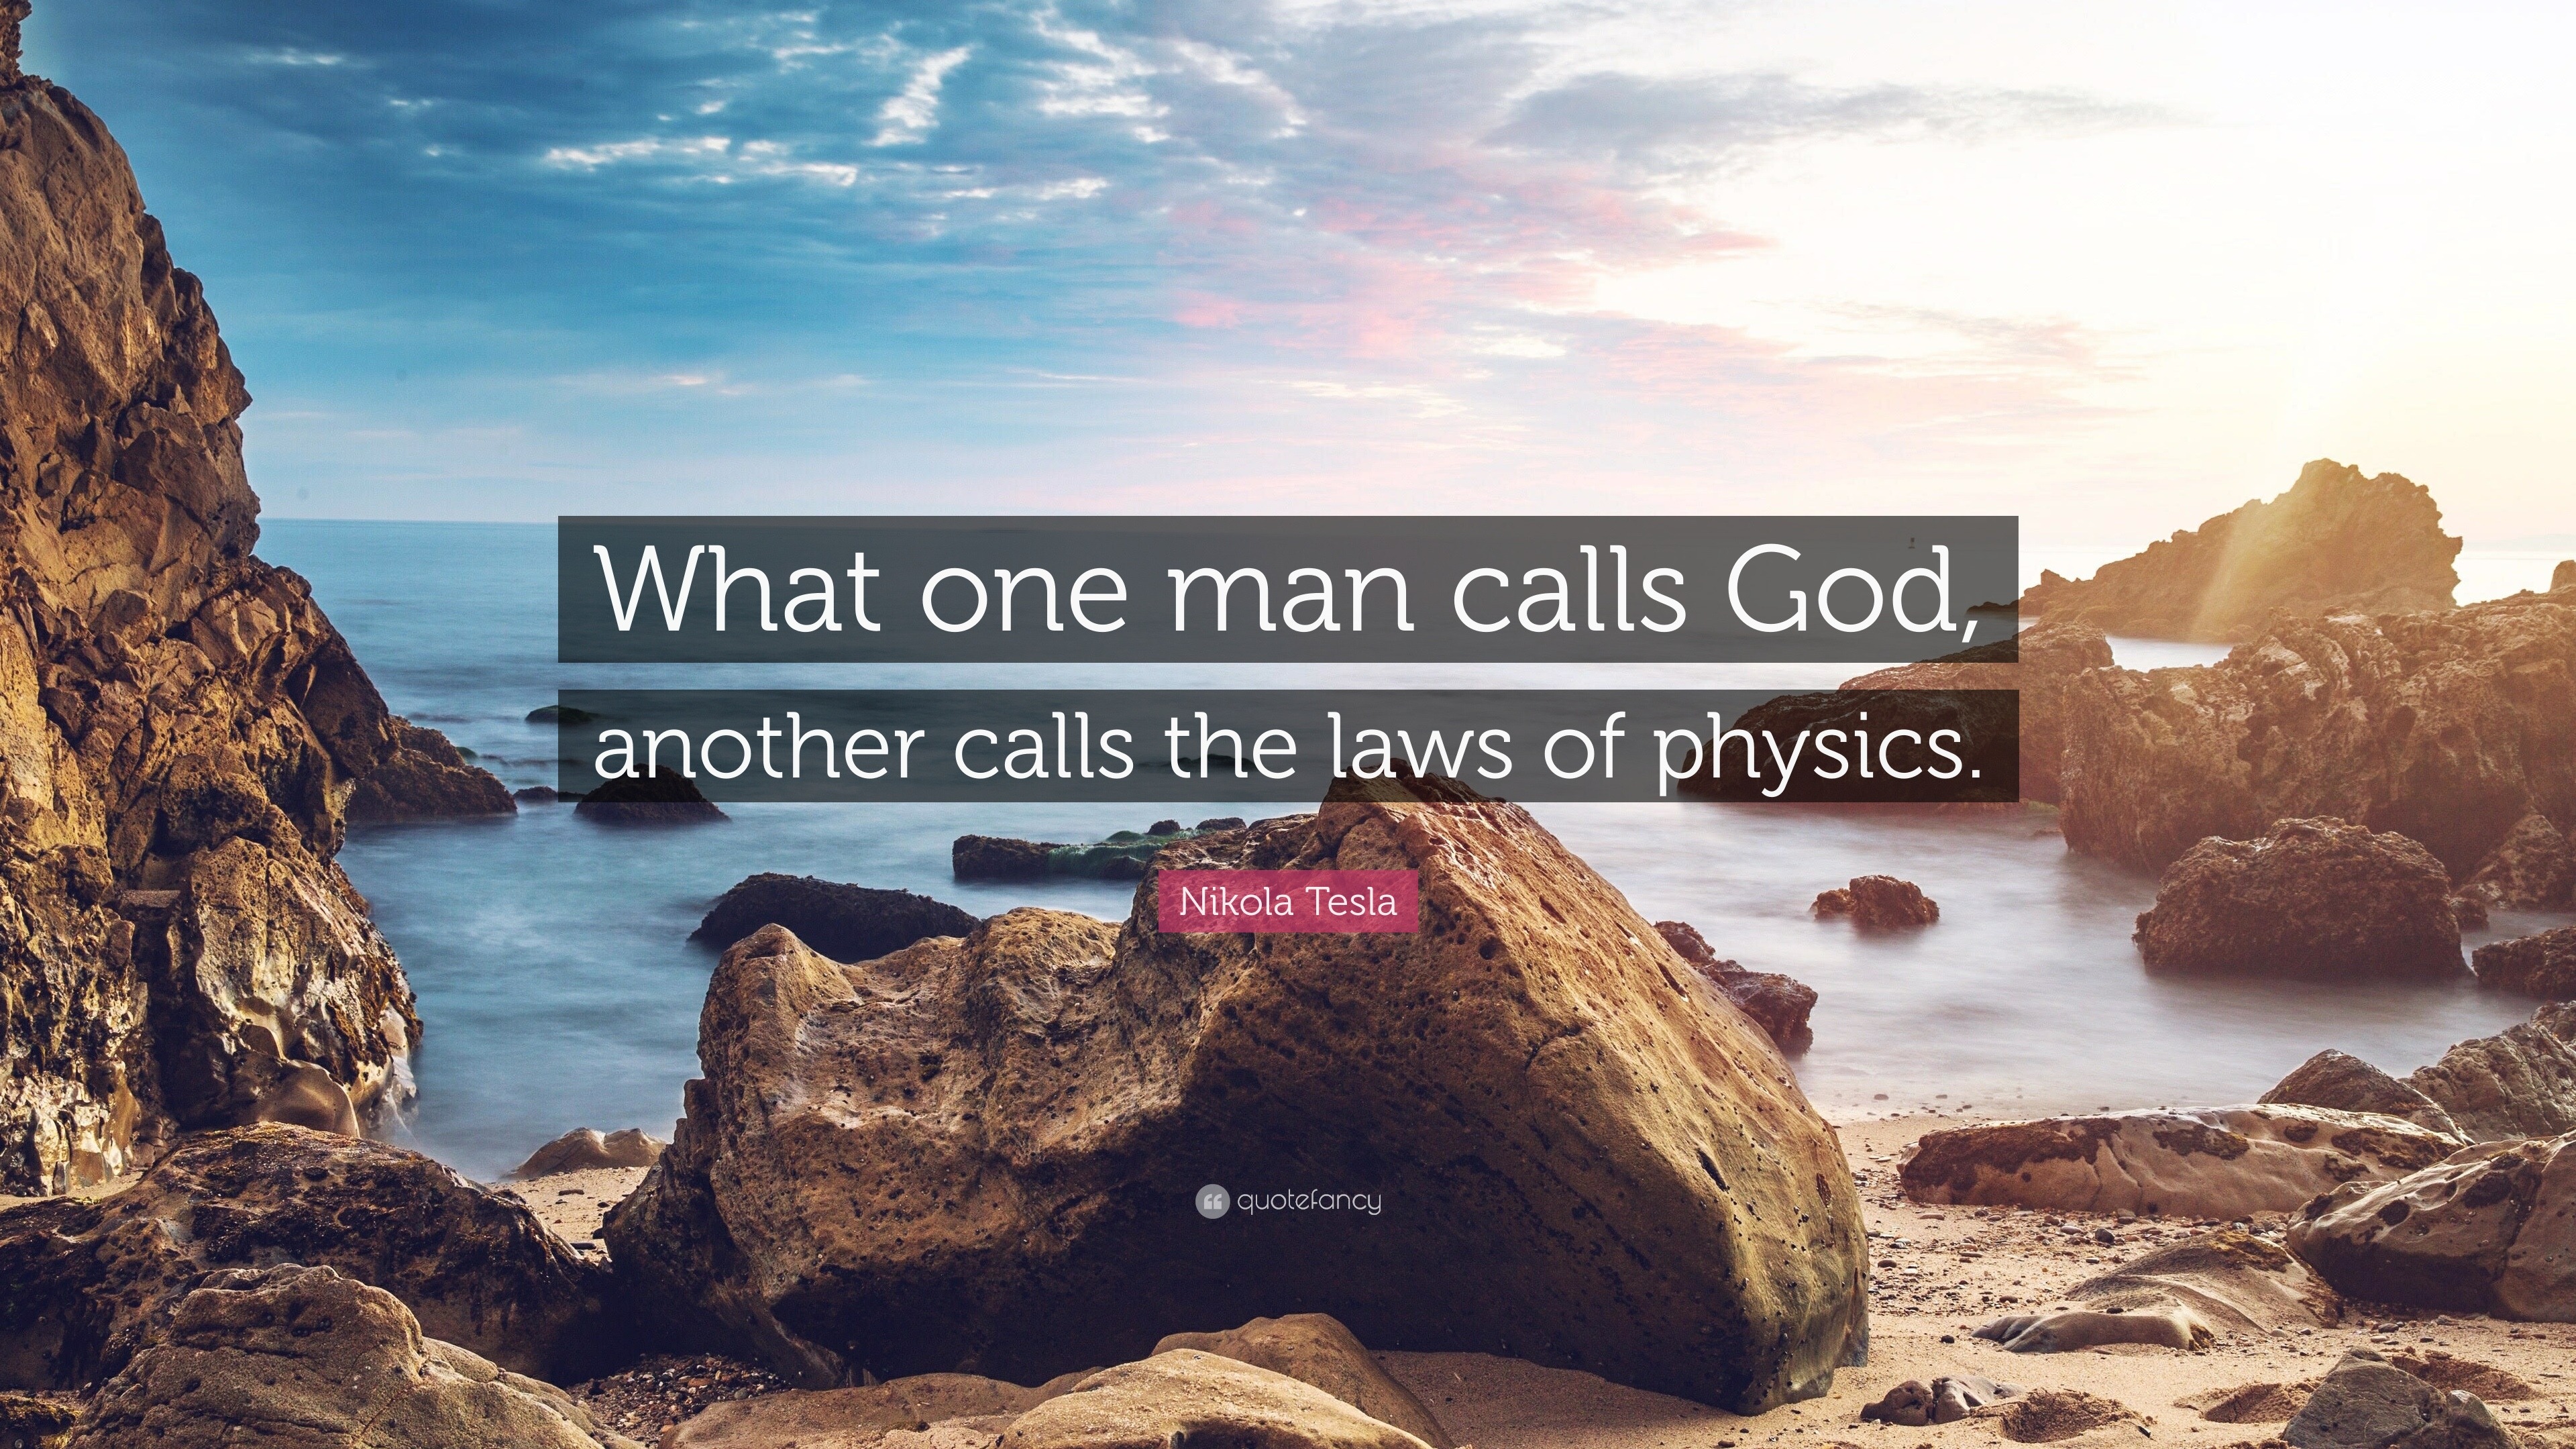 Nikola Tesla NEW POSTER fp457 What one man calls God another calls physics 